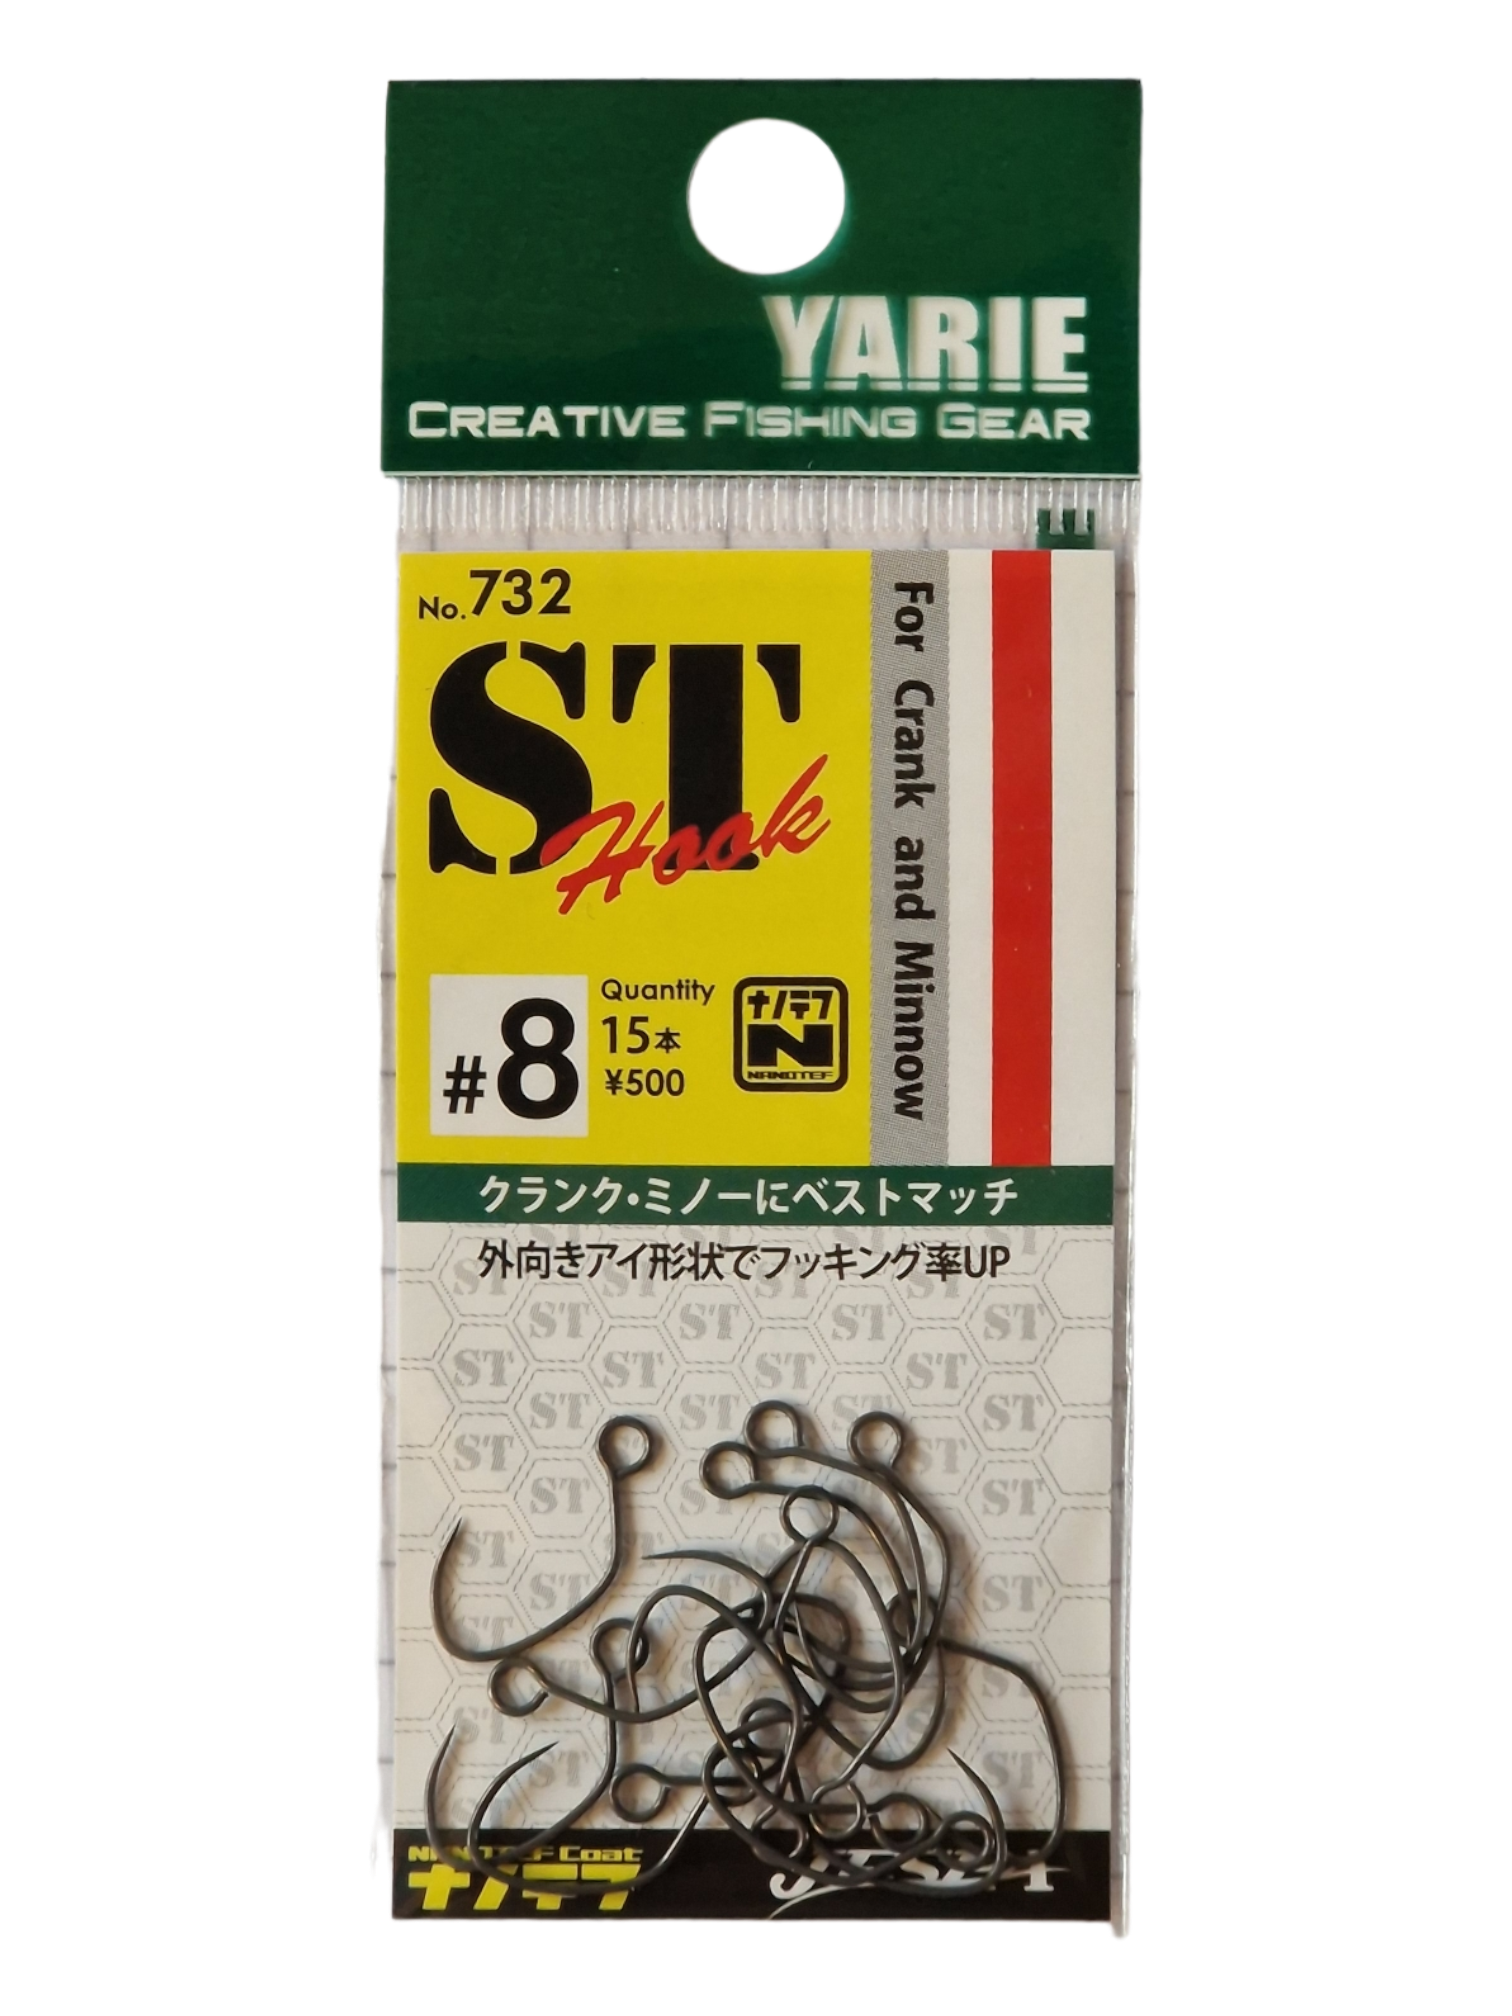 Yarie №731 ST Hook Nanotef — Ratter Baits